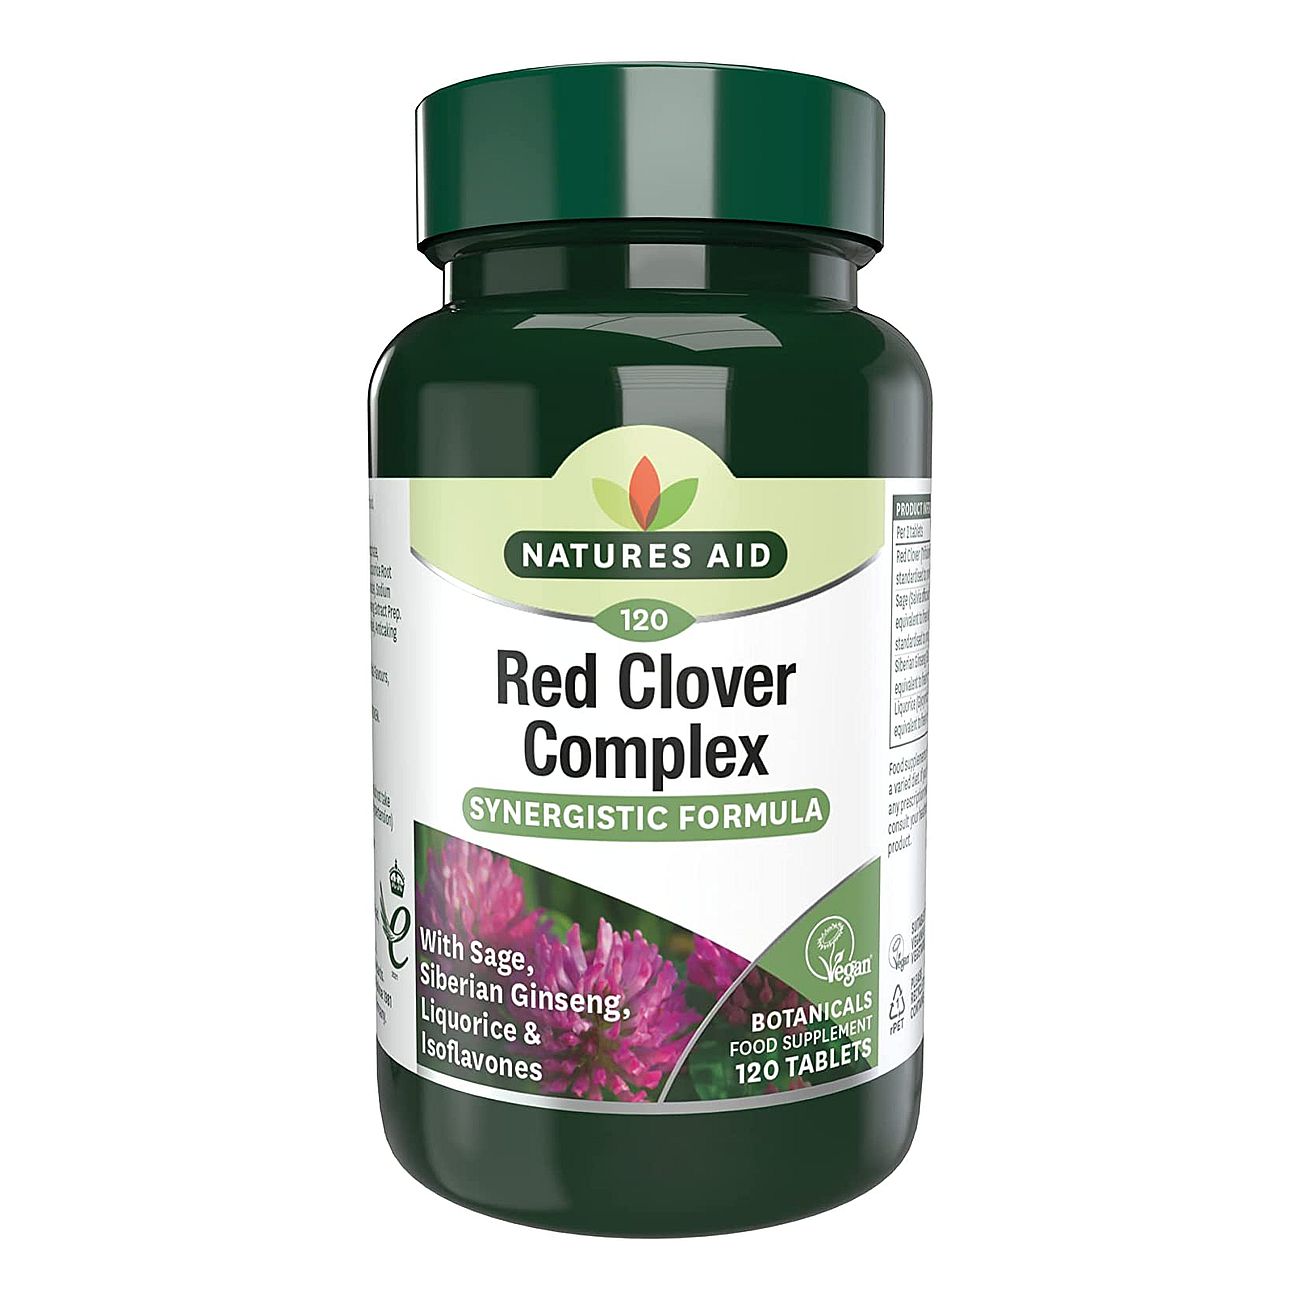 Vegan Red Clover Complex Sage Siberian Ginseng & Liquorice 120 Tabs